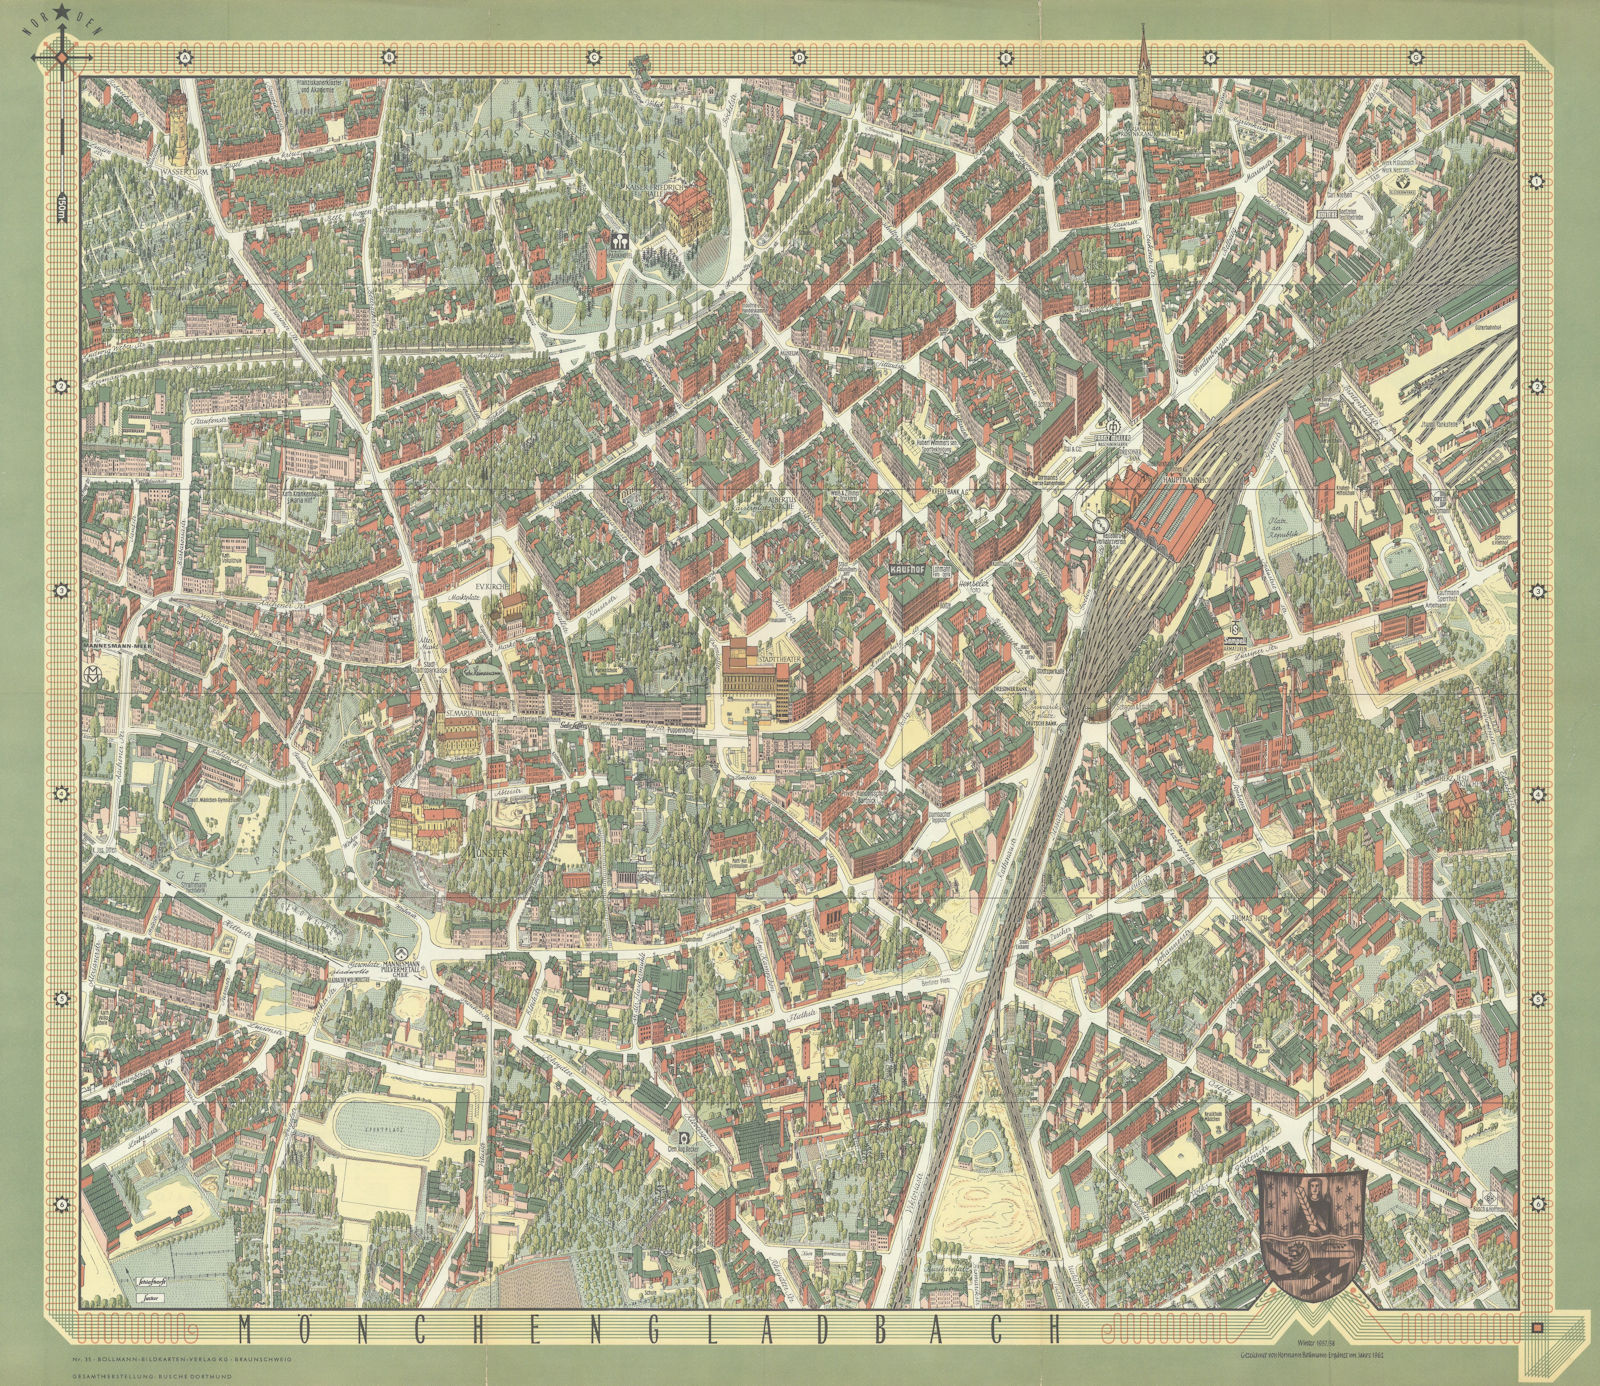 Mönchengladbach pictorial bird's eye view city plan #35 BOLLMANN 1962 old map